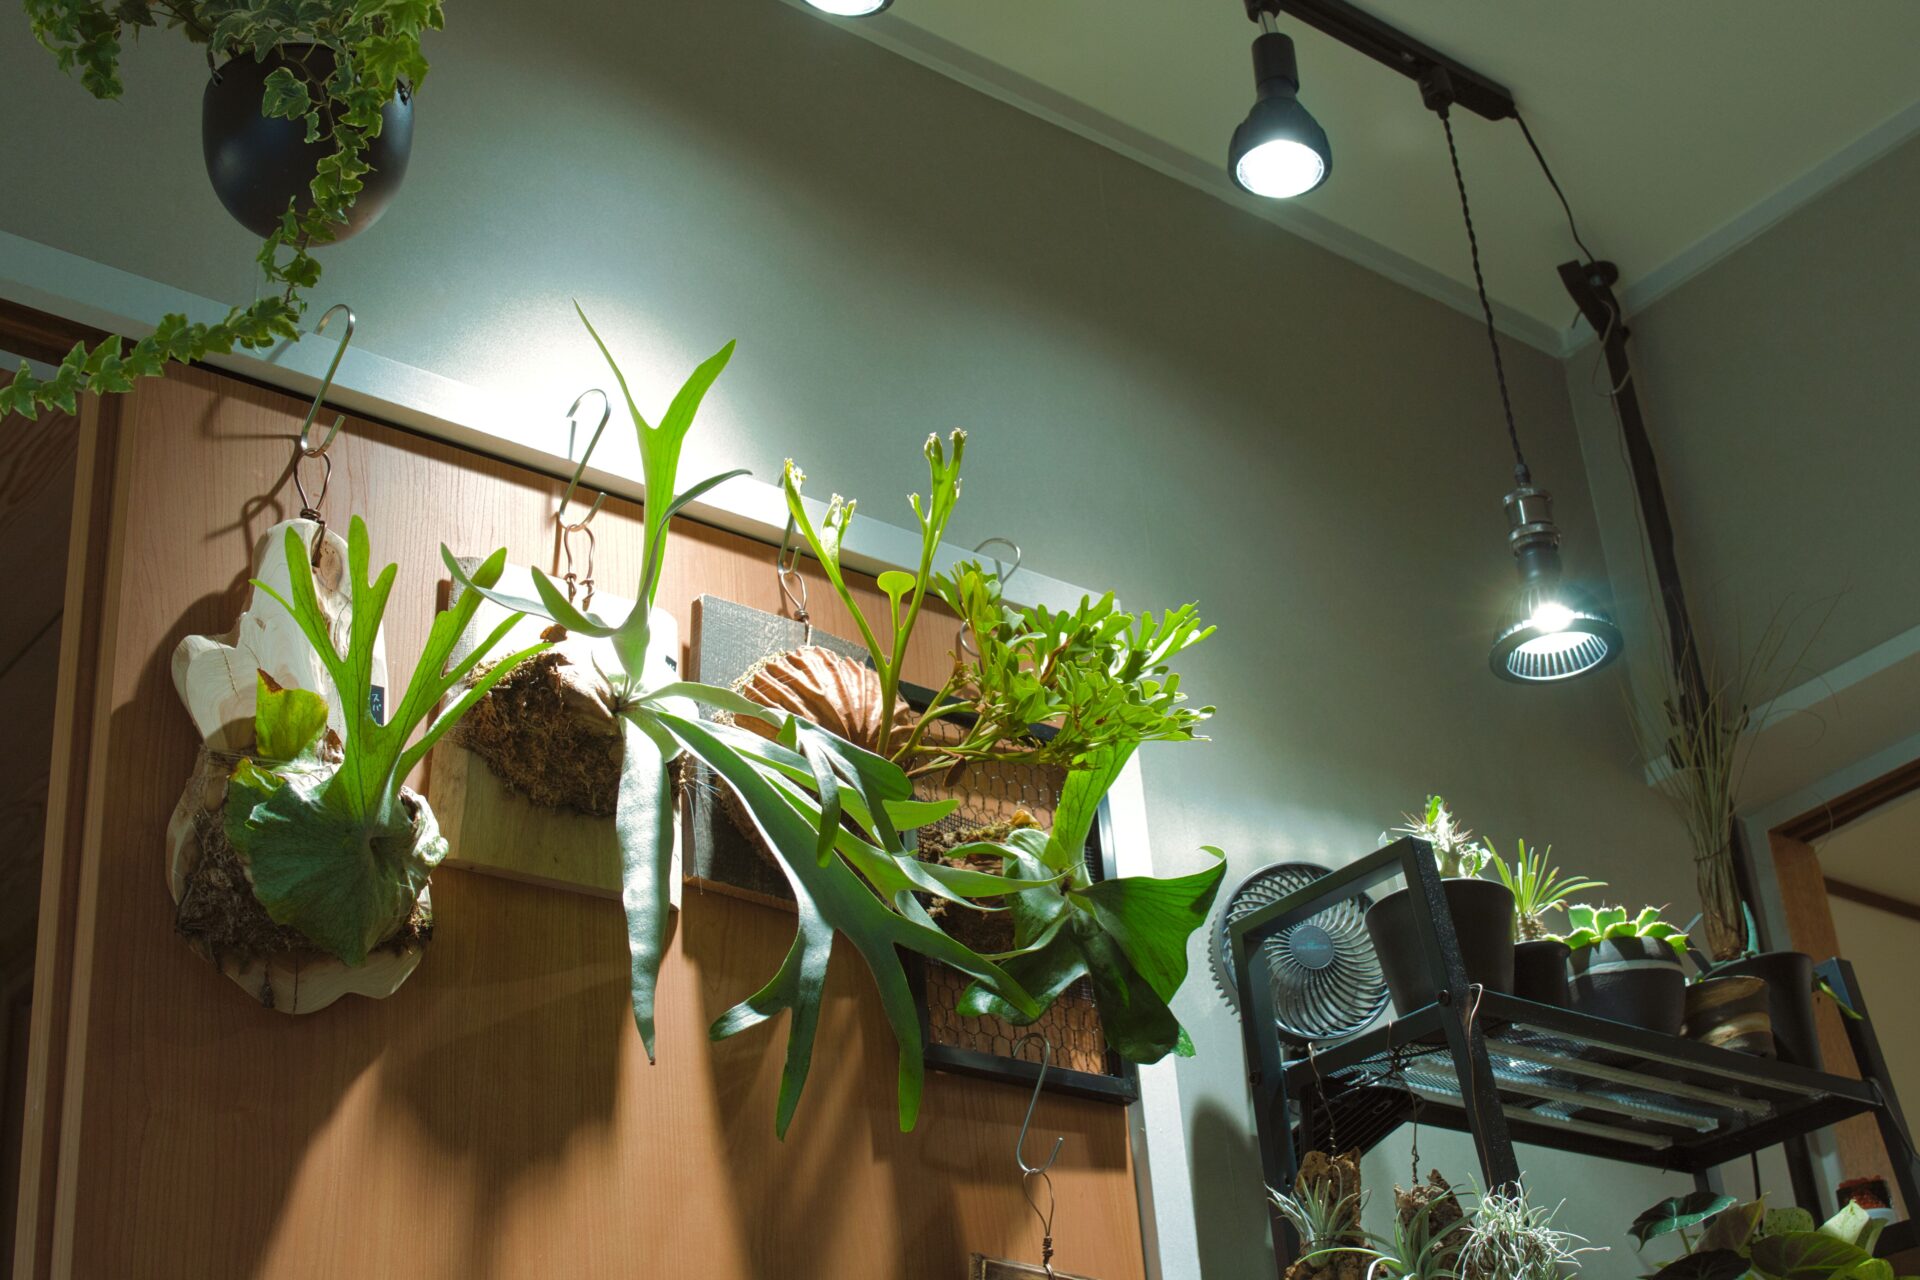 HaruDesign 植物育成LEDライト GL-A 6K 3個セット